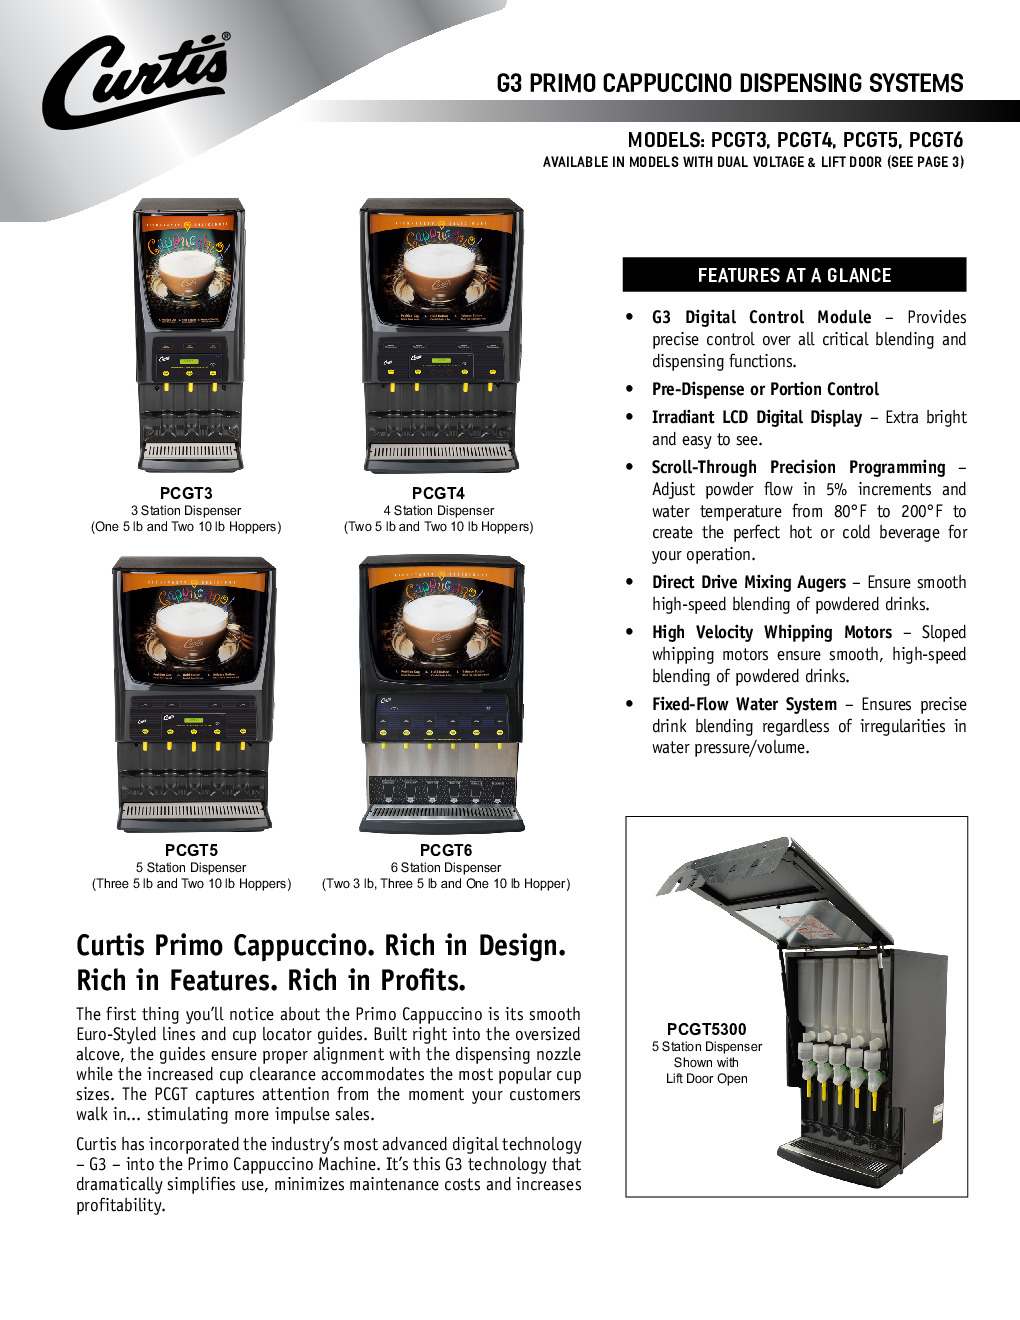 Curtis PCGT5 Electric (Hot) Beverage Dispenser